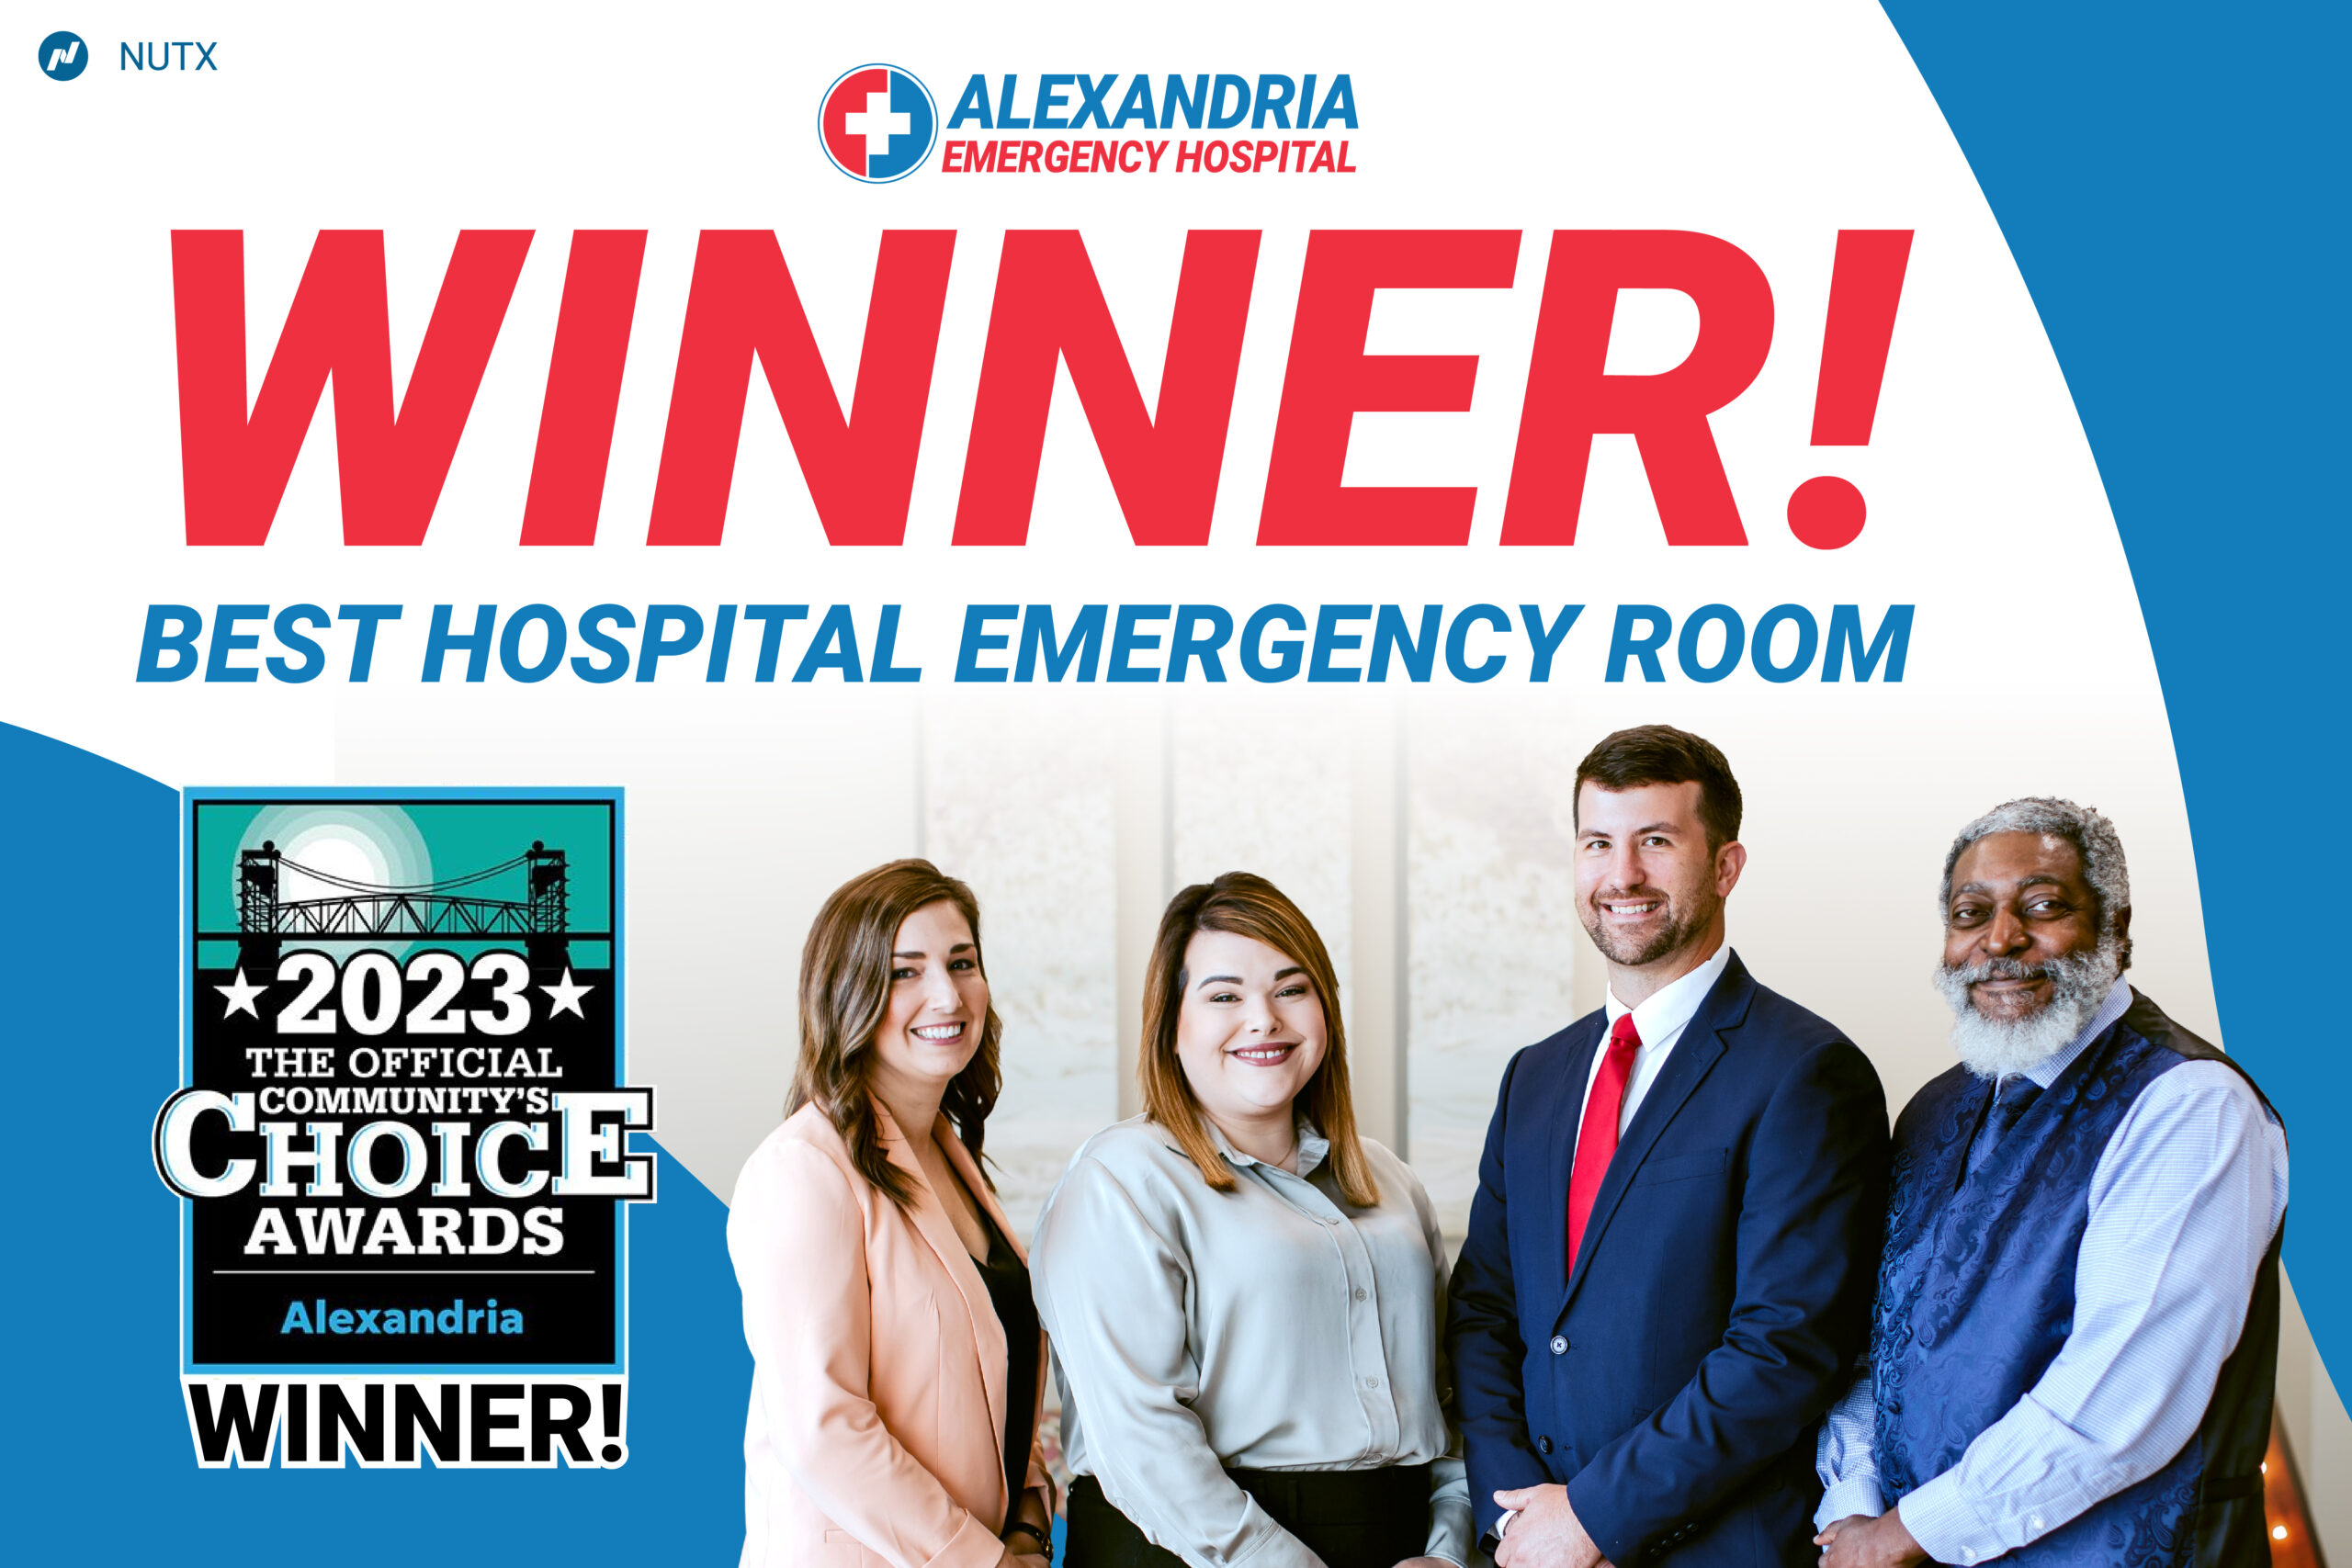 Alexandria Emergency Hospital wins ‘Best Hospital Emergency Room’